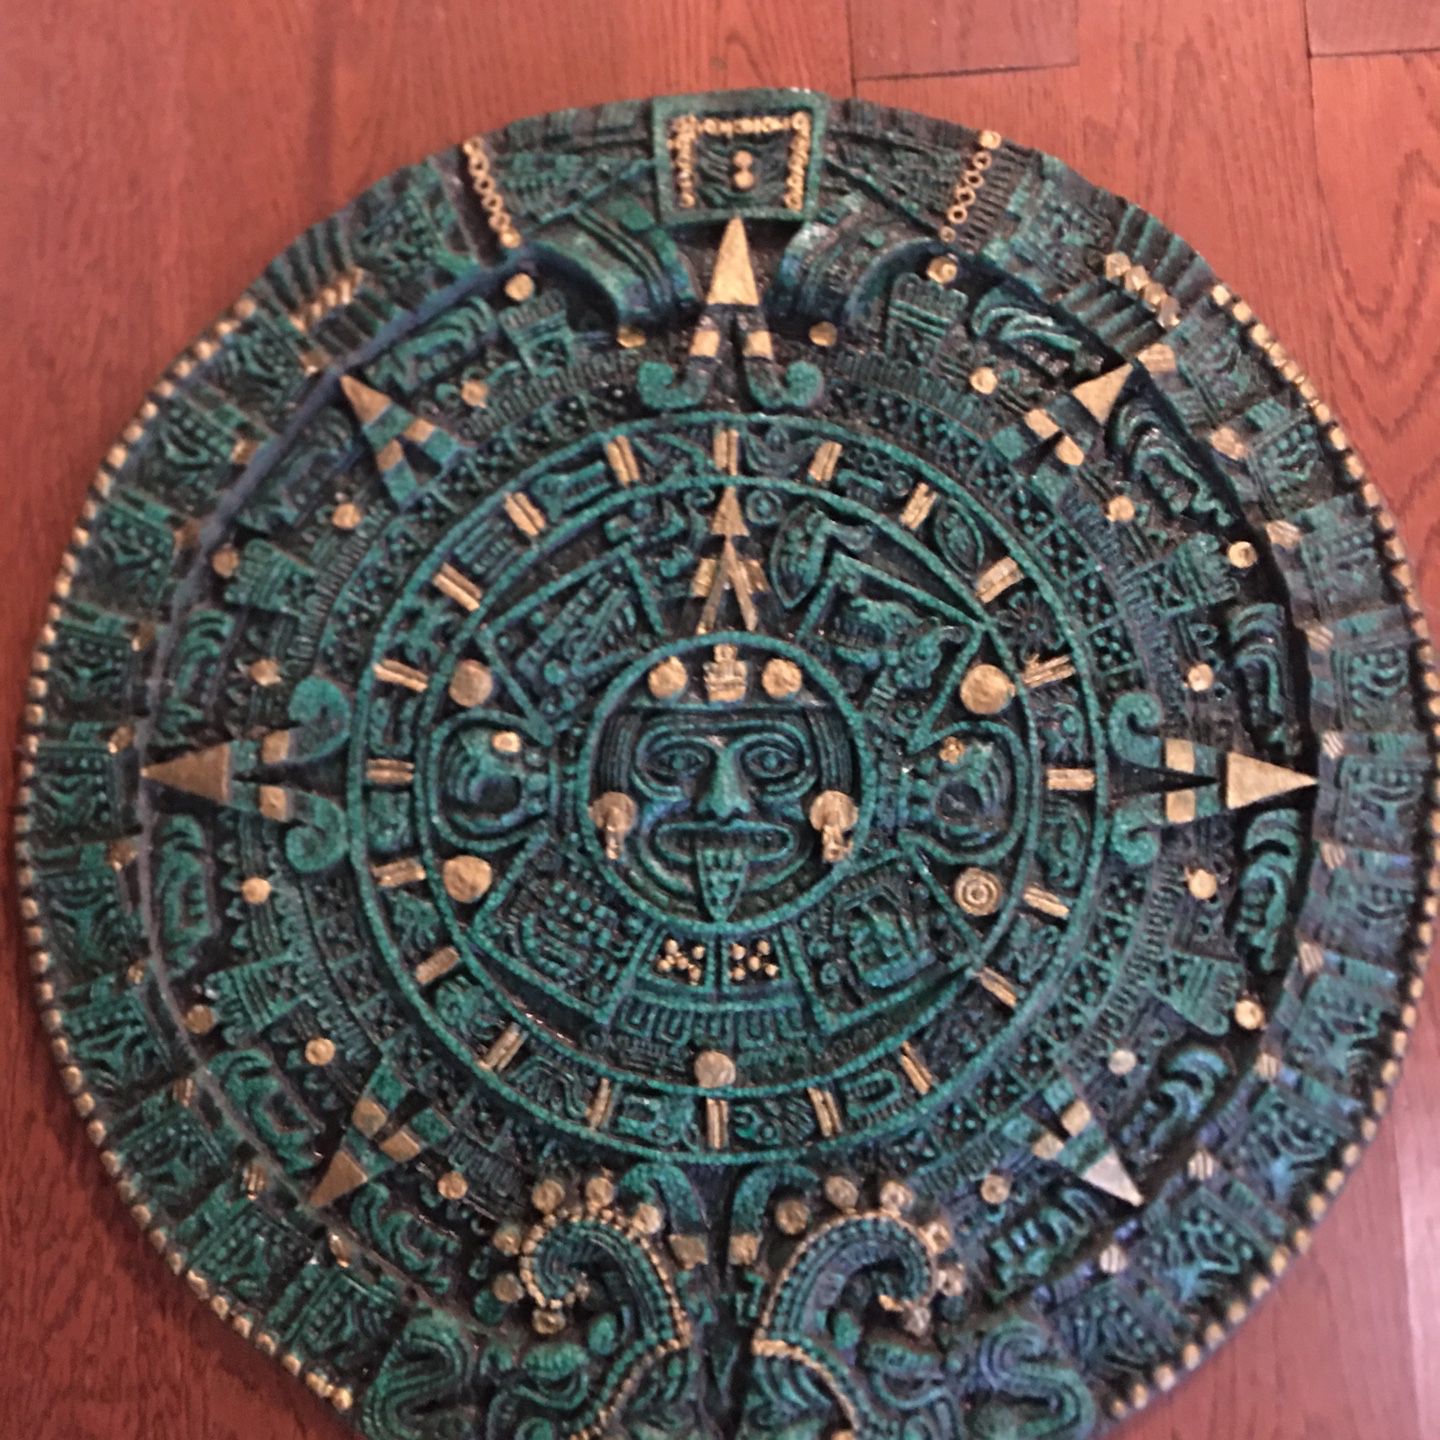 Calendario Azteca (Hard Stone) From Mexico